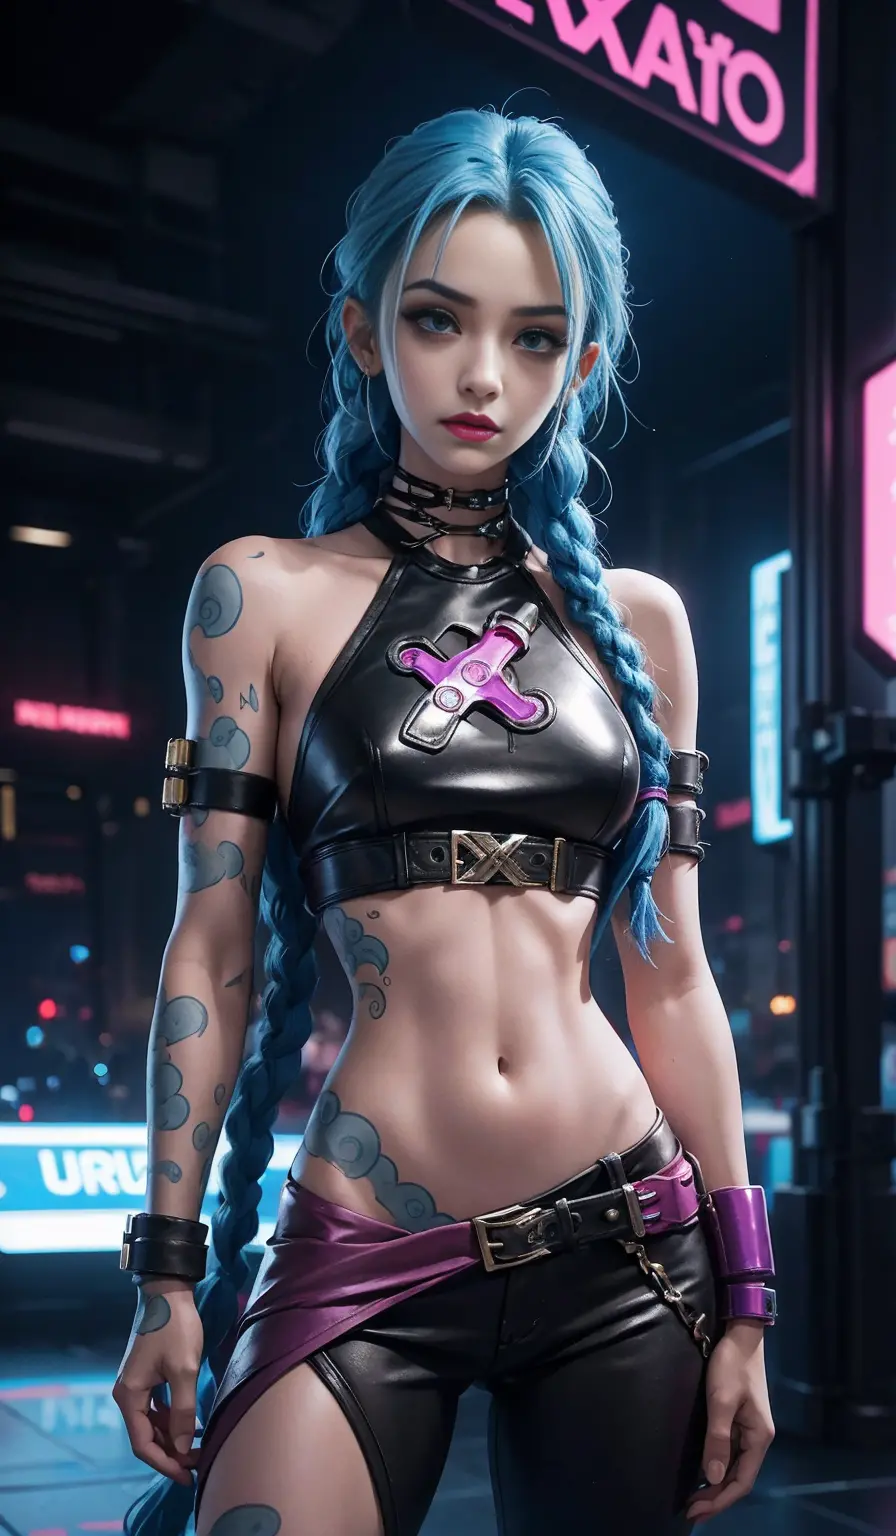 jinx arcano, uma mulher com cabelo azul e tatuagens, mulher cyberpunk mulher anime, pants, Deusa cyberpunk raivosa bonita, estil...